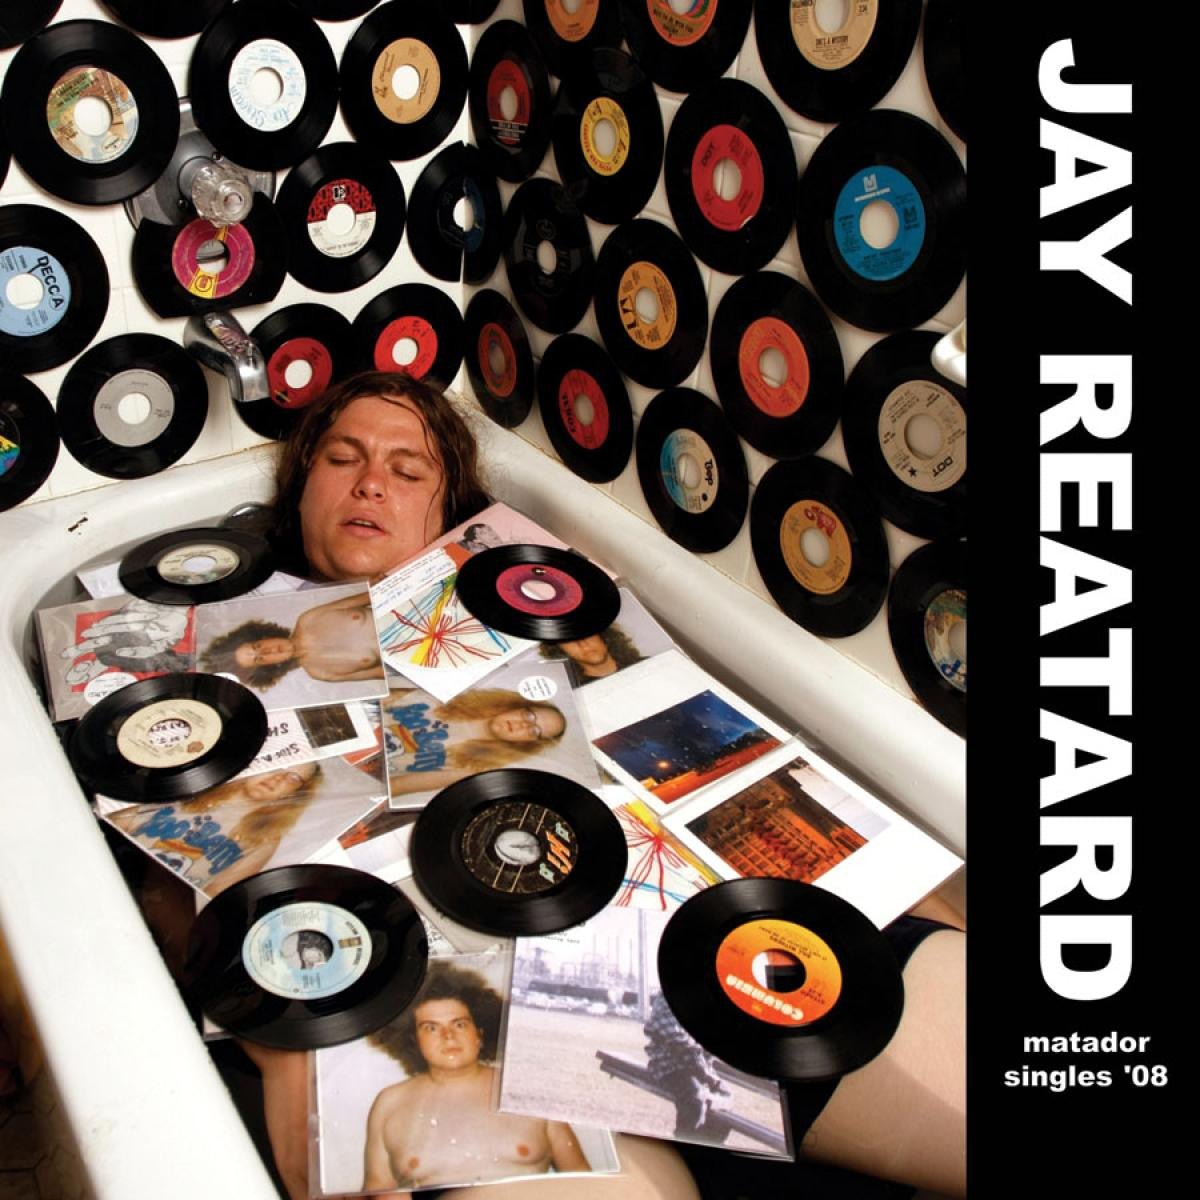 Jay Reatard - Matador Singles 08 (Digital Download) - 744861082200 - LP's - Yellow Racket Records